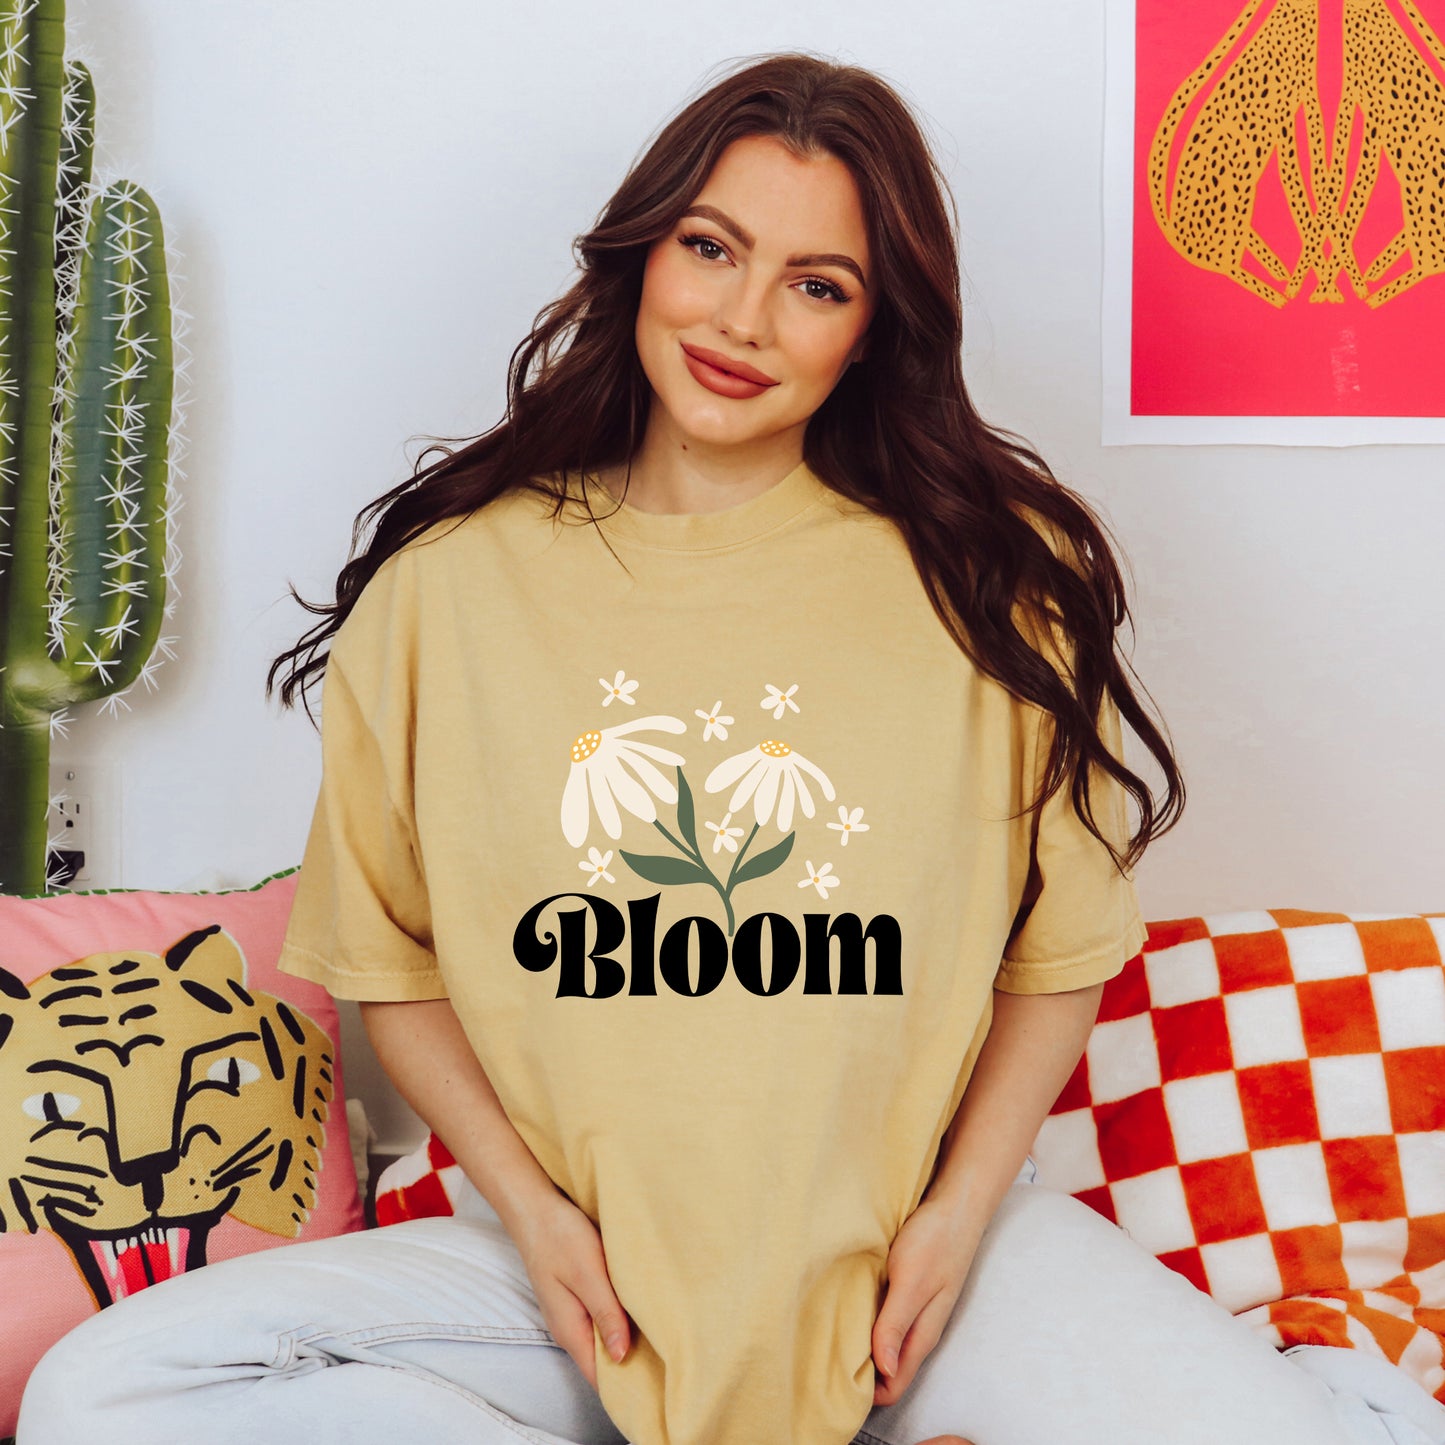 Bloom Daisy Flower | Garment Dyed Short Sleeve Tee